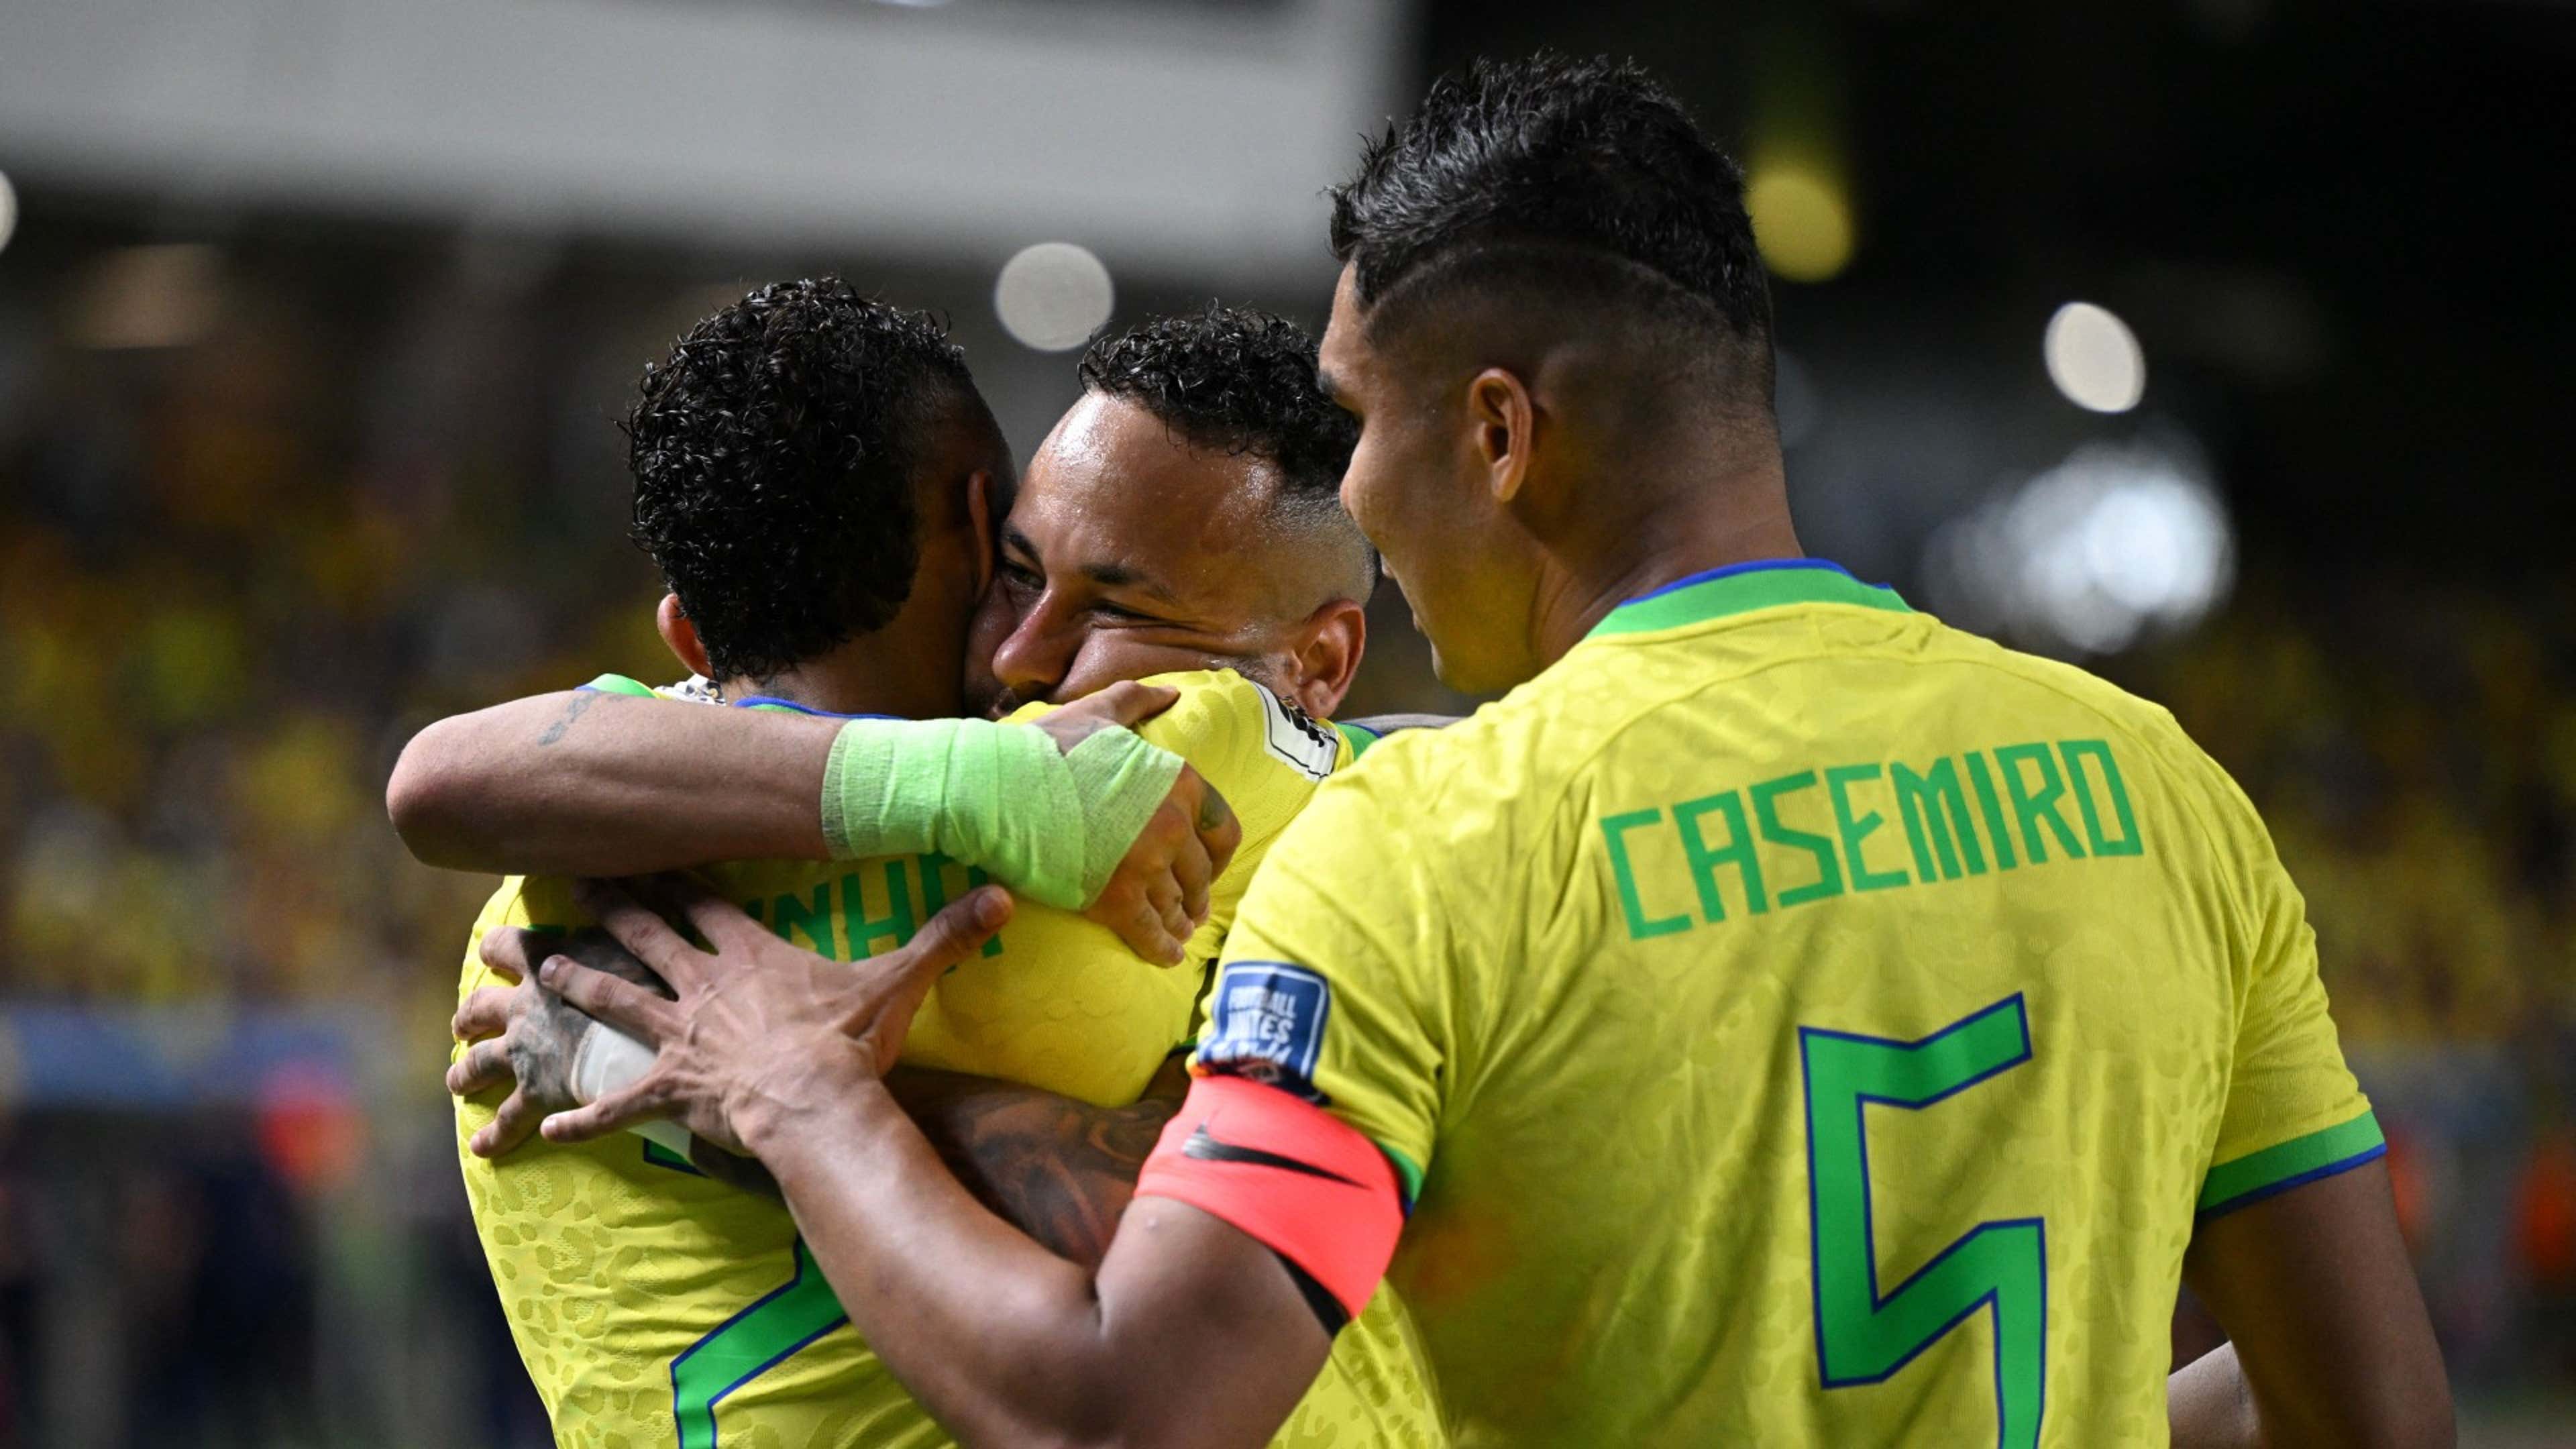 Neymar Scores 78th, 79th Goals to Surpass Pelé and Break Brazil's All-Time  Goal-Scoring Record